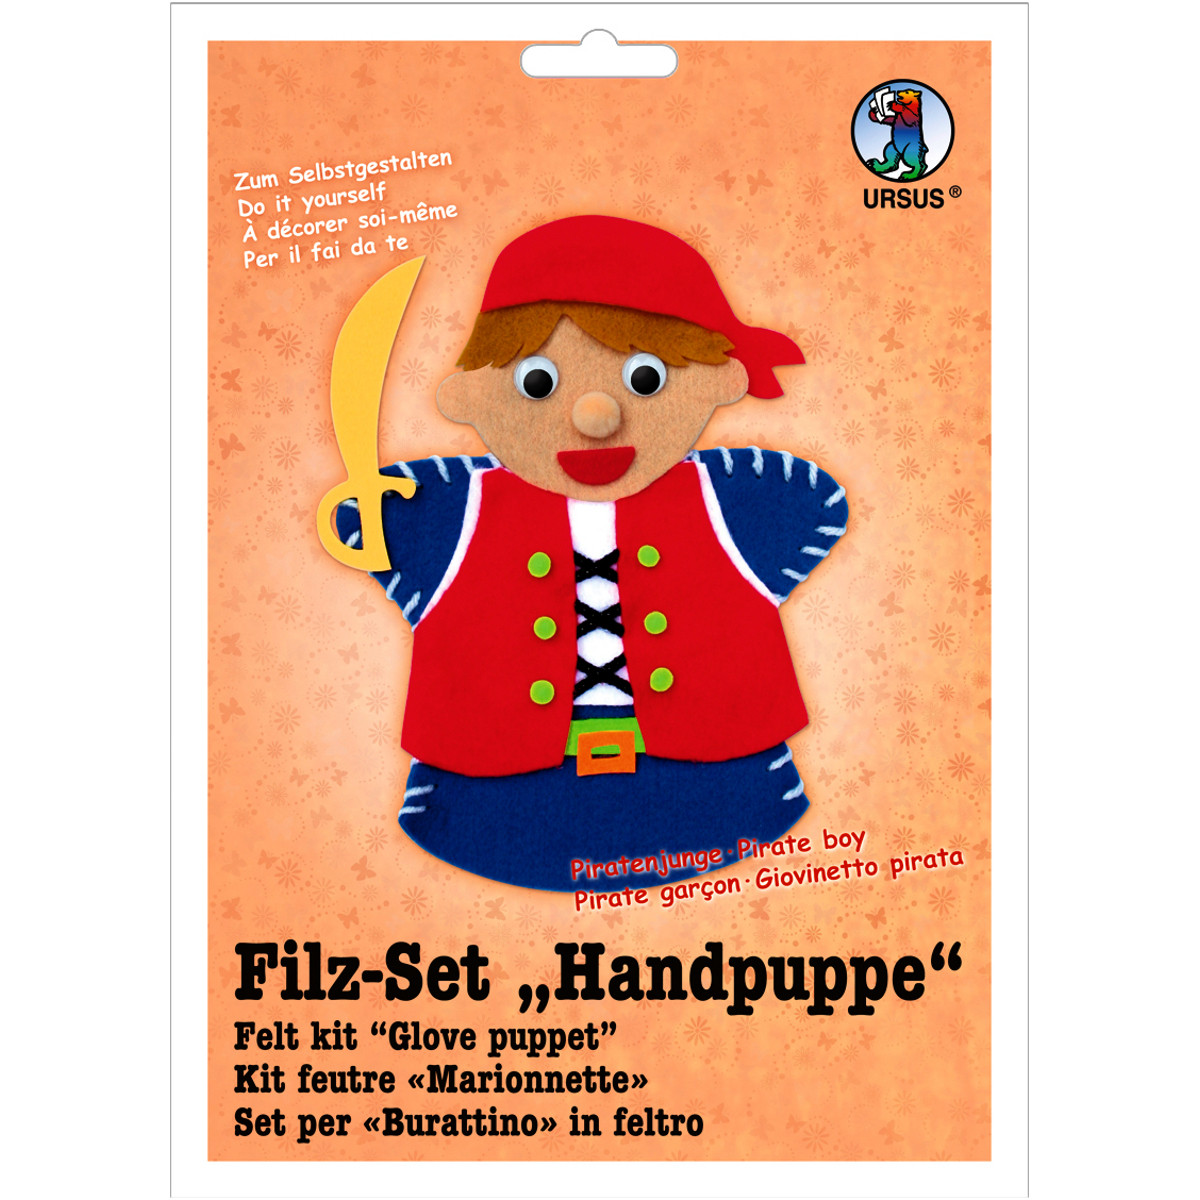 Filz-Set "Handpuppe" Piratenjunge